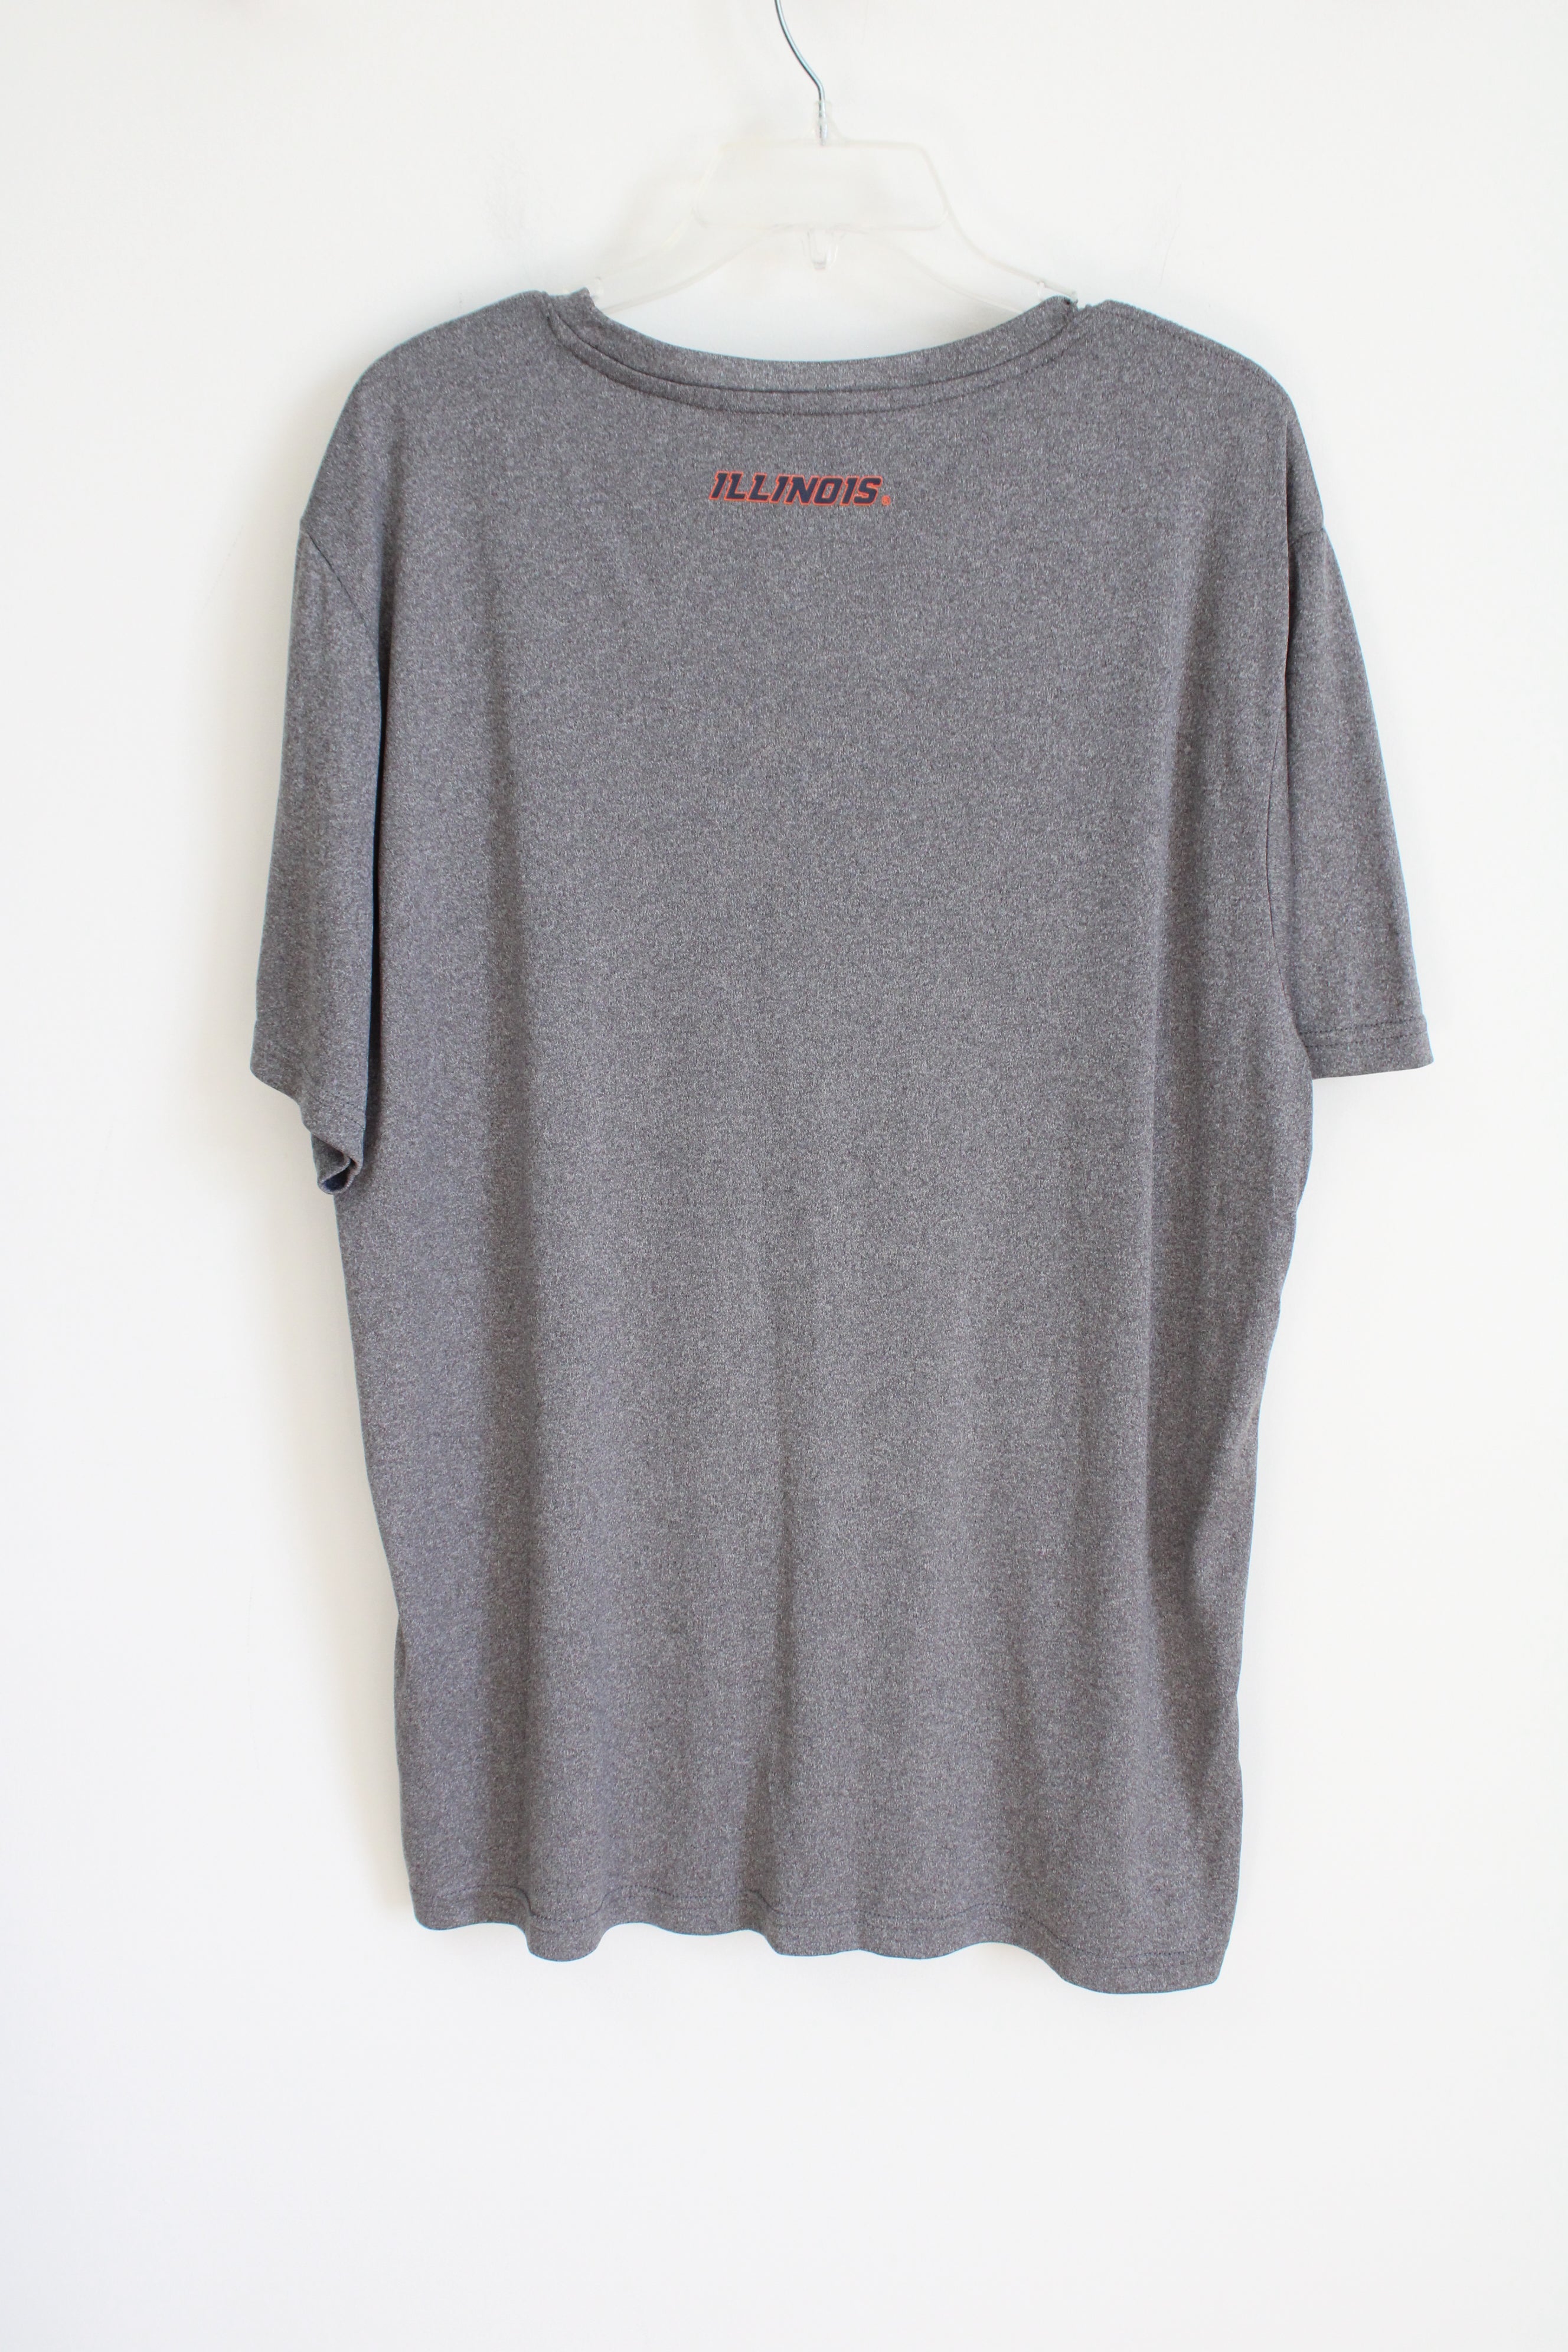 Colosseum Illinois Gray Shirt | XL